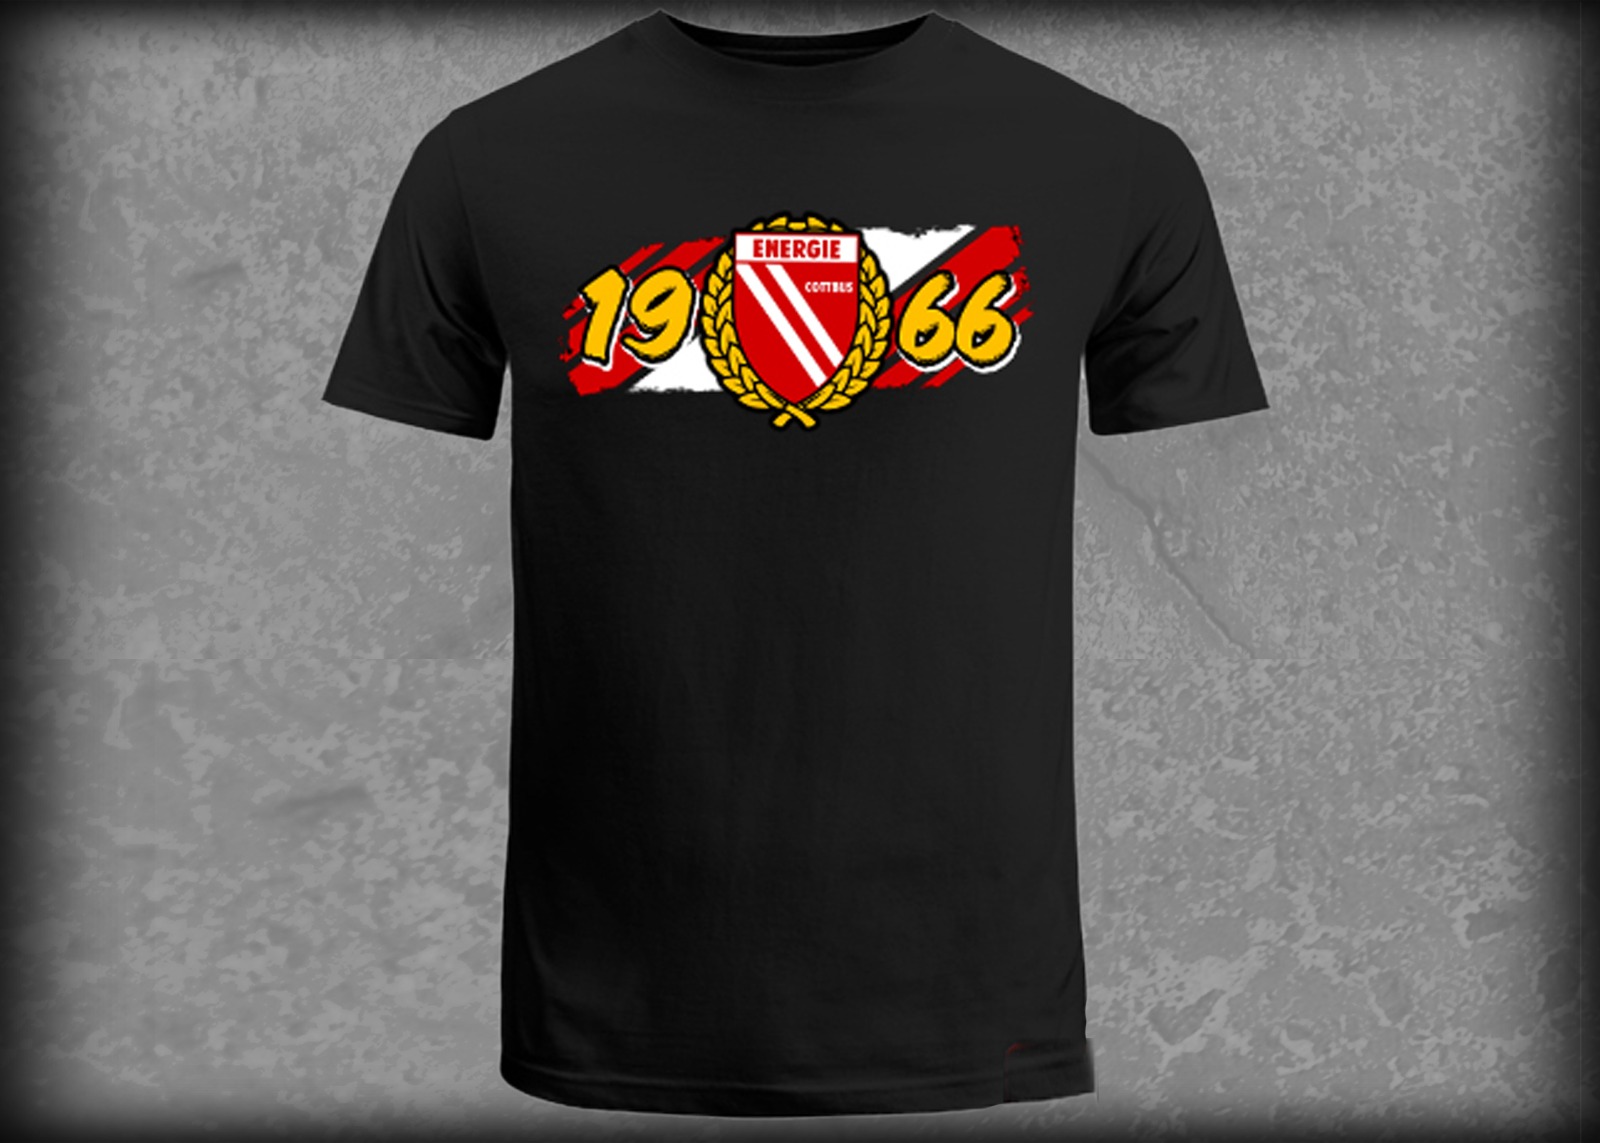 1966 Shirt-image